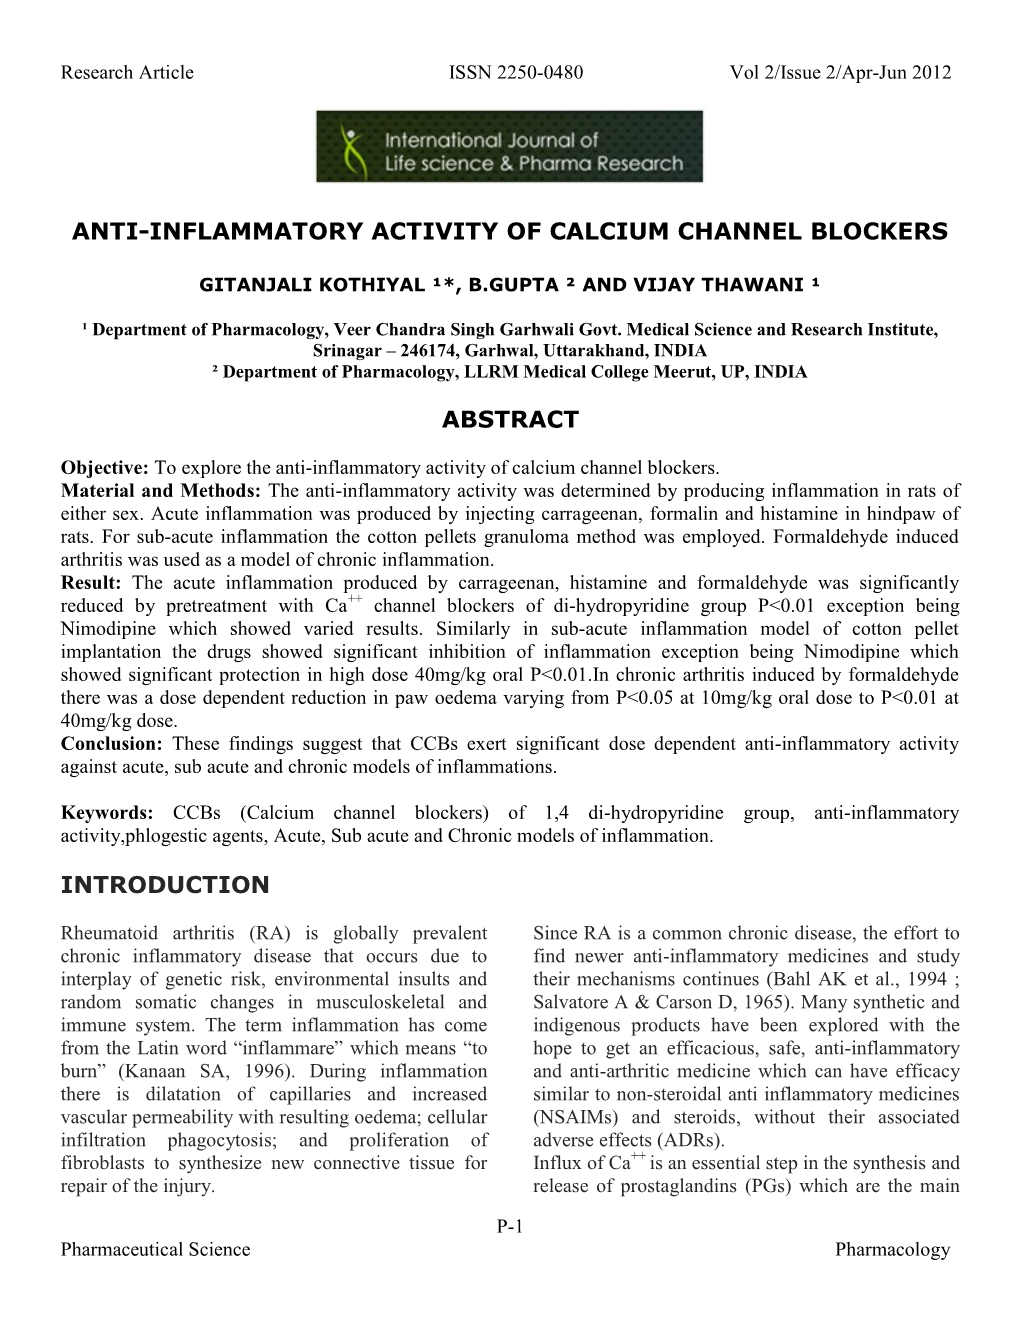 Anti-Inflammatory Activity of Calcium Channel Blockers